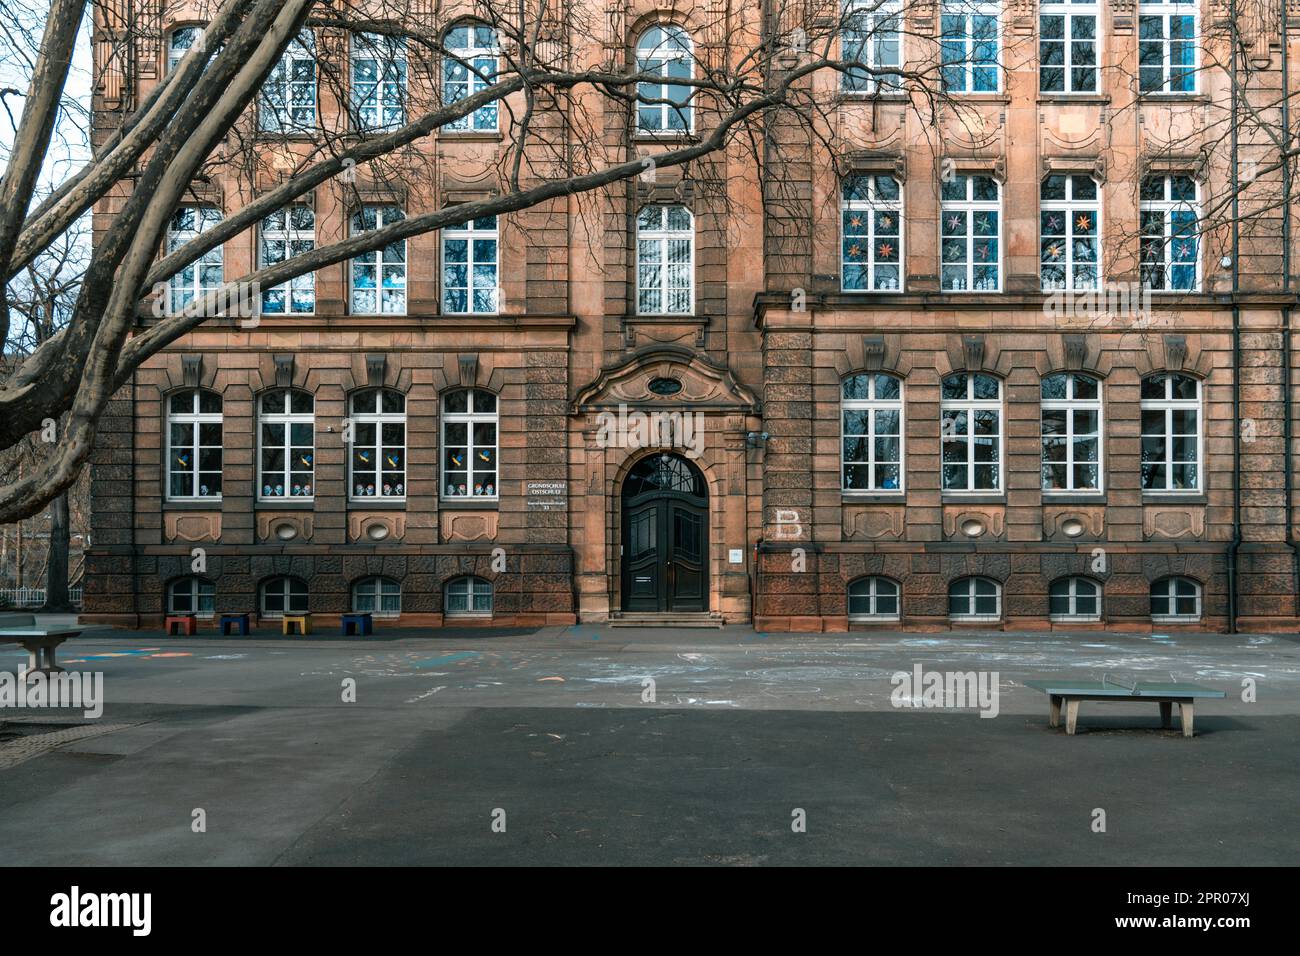 Historical elementary school building with schoolyard in Neustadt an der Weinstrasse, Germany Stock Photo